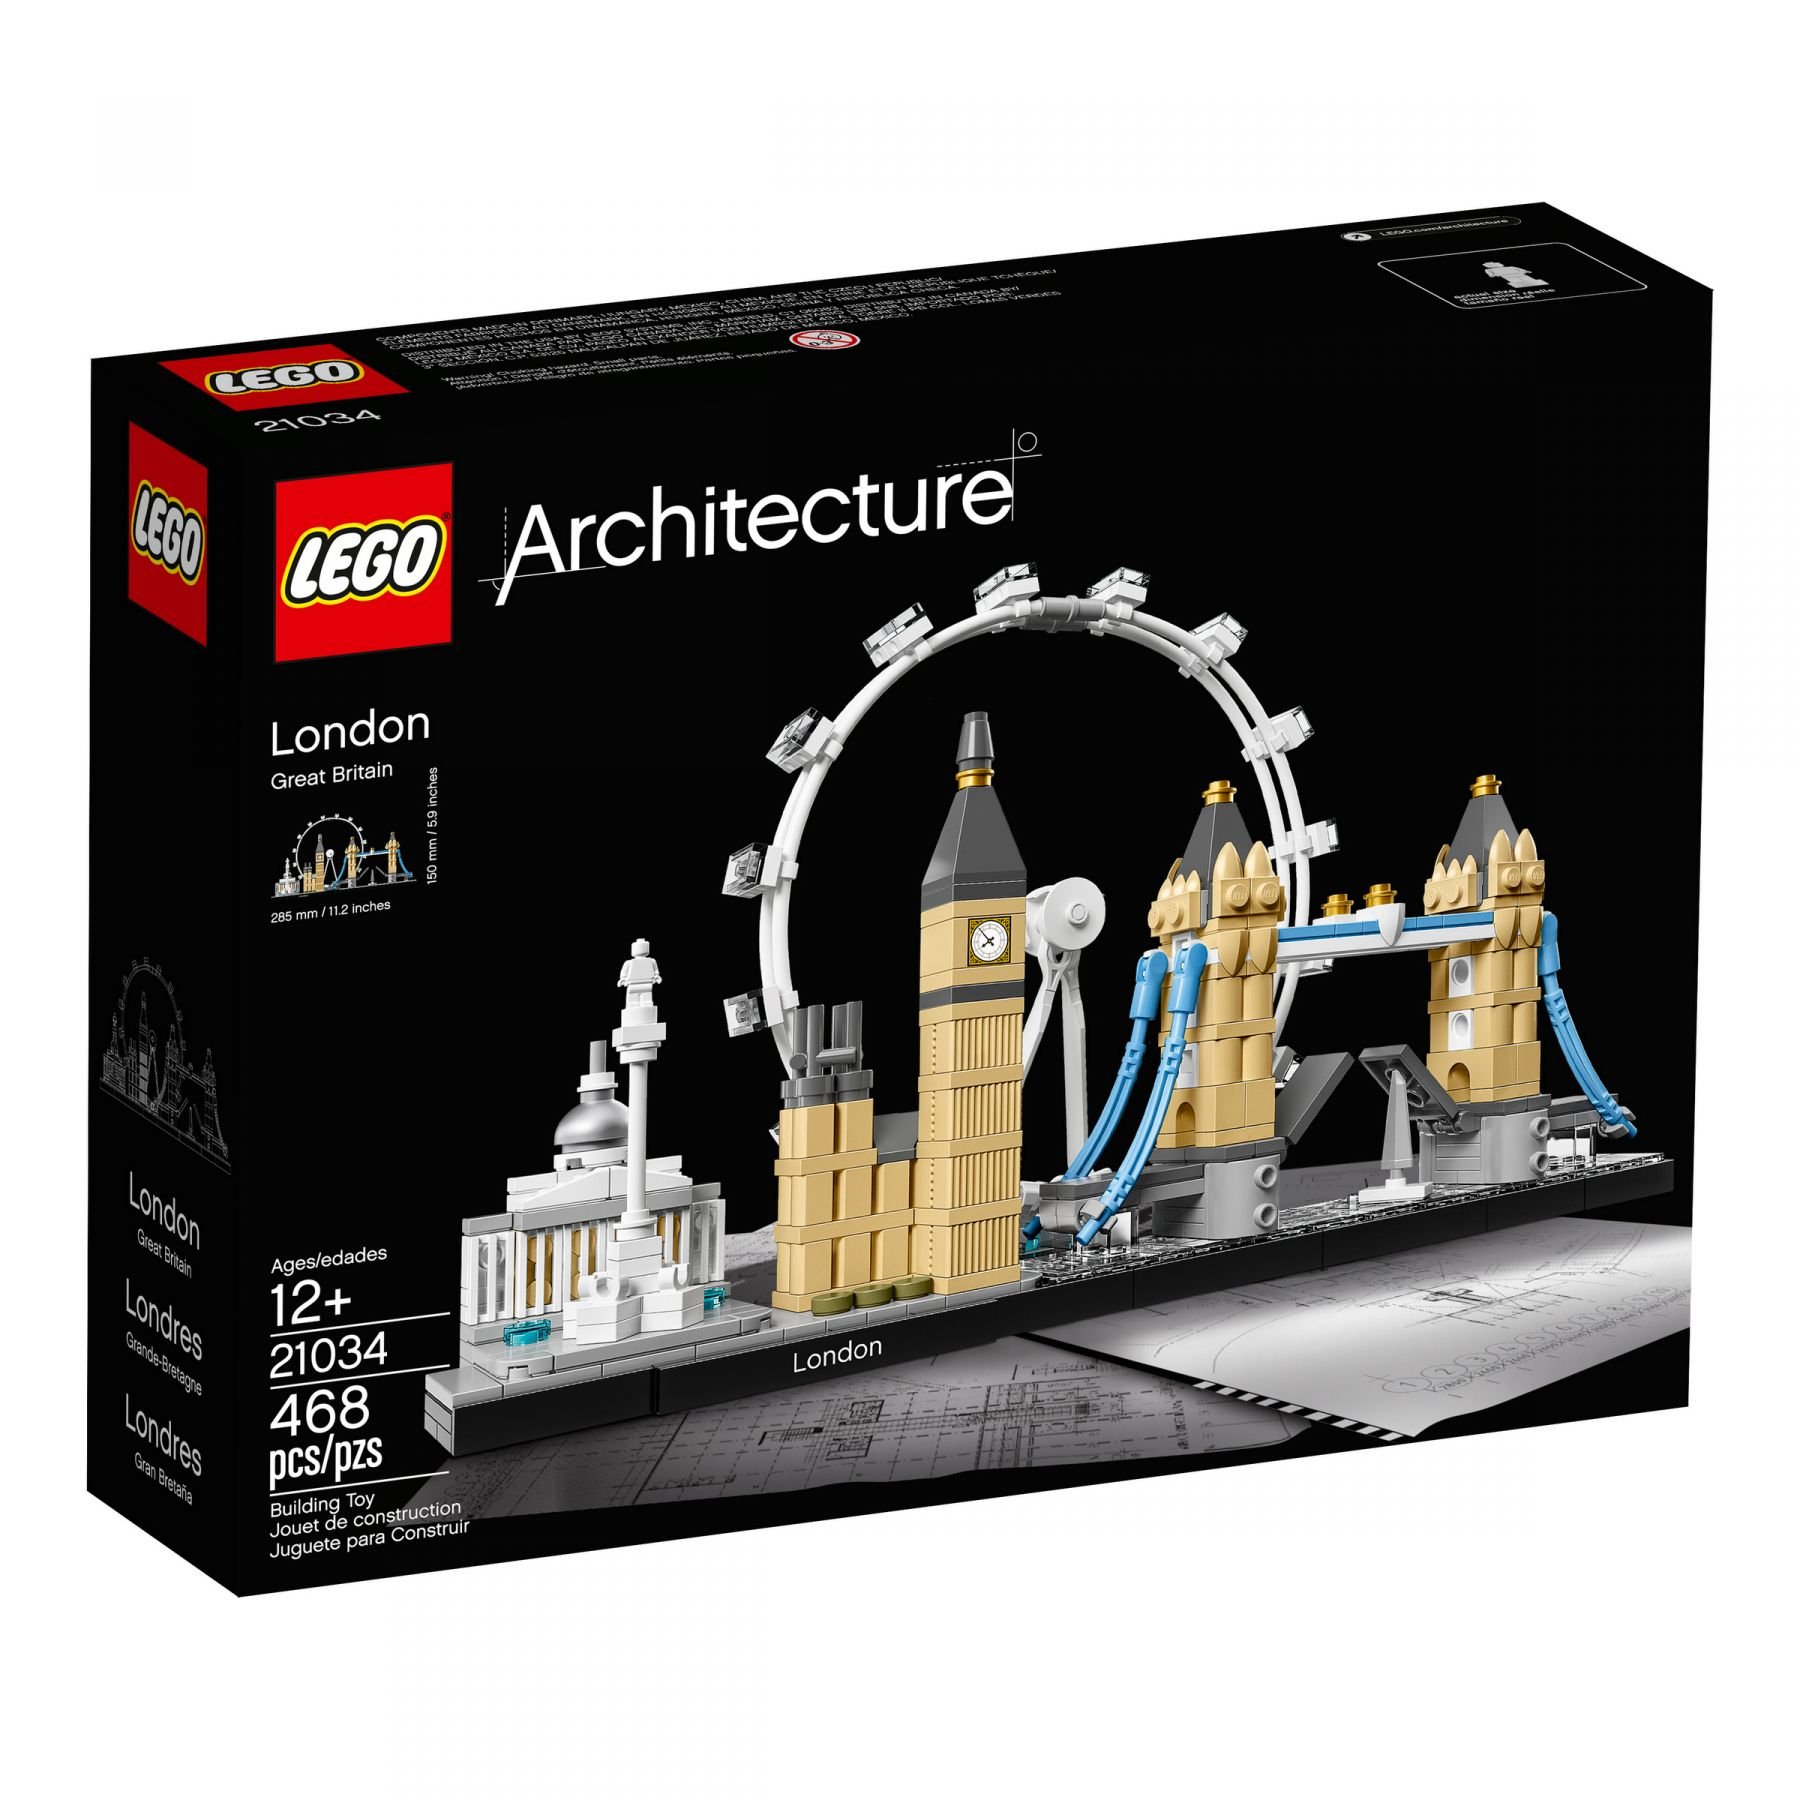 LEGO Architecture 21034 London LEGO_21034_alt1.jpg